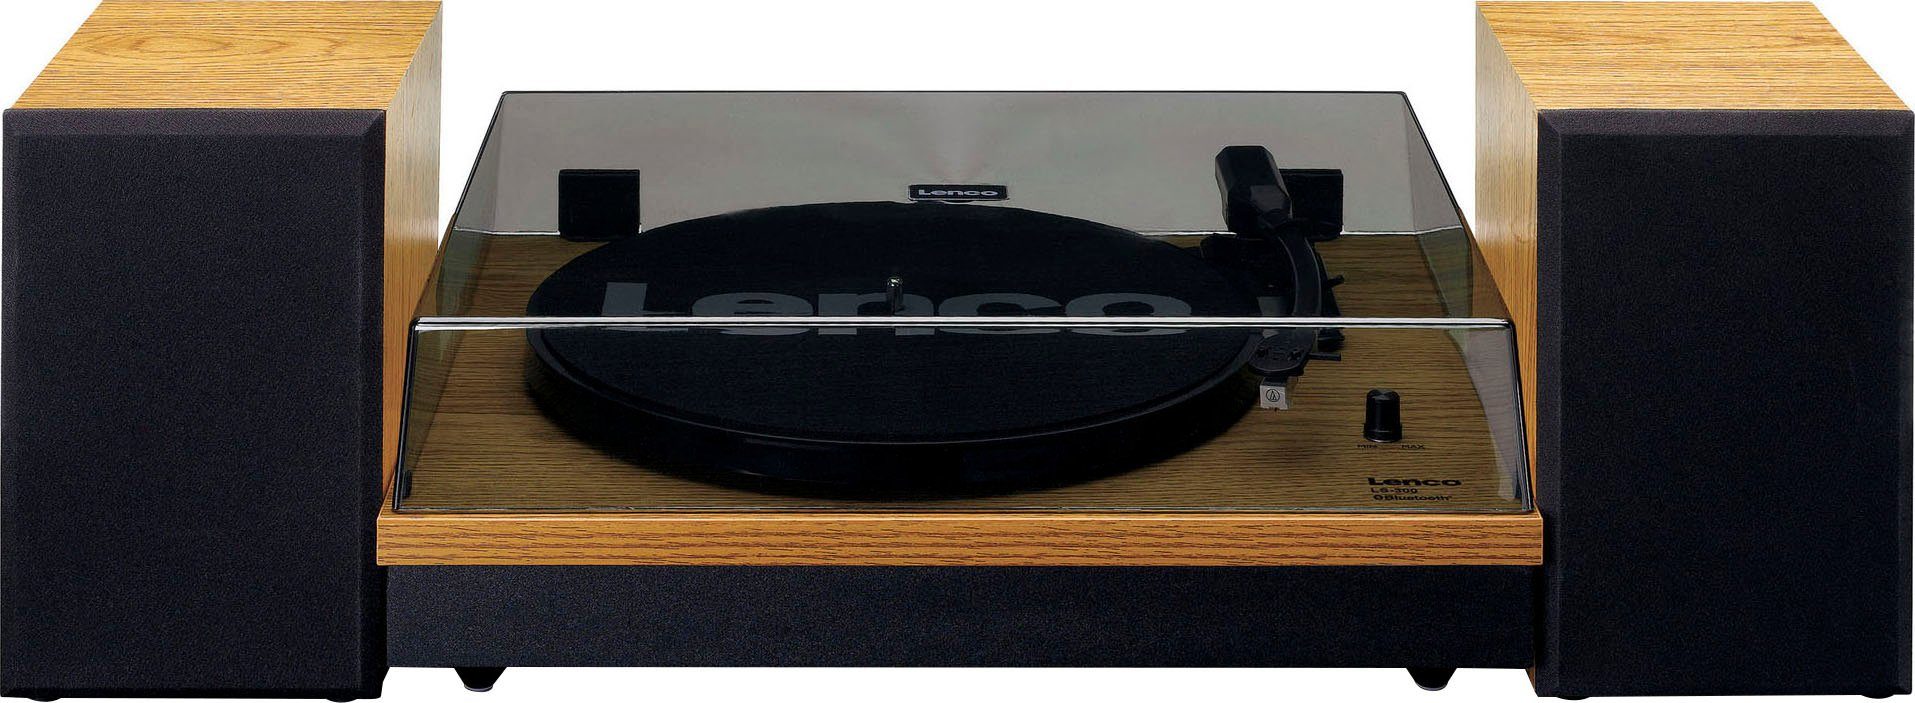 Lenco LS-300WD Plattenspieler mit ext. Holz Plattenspieler (Riemenantrieb) Lautsprechern